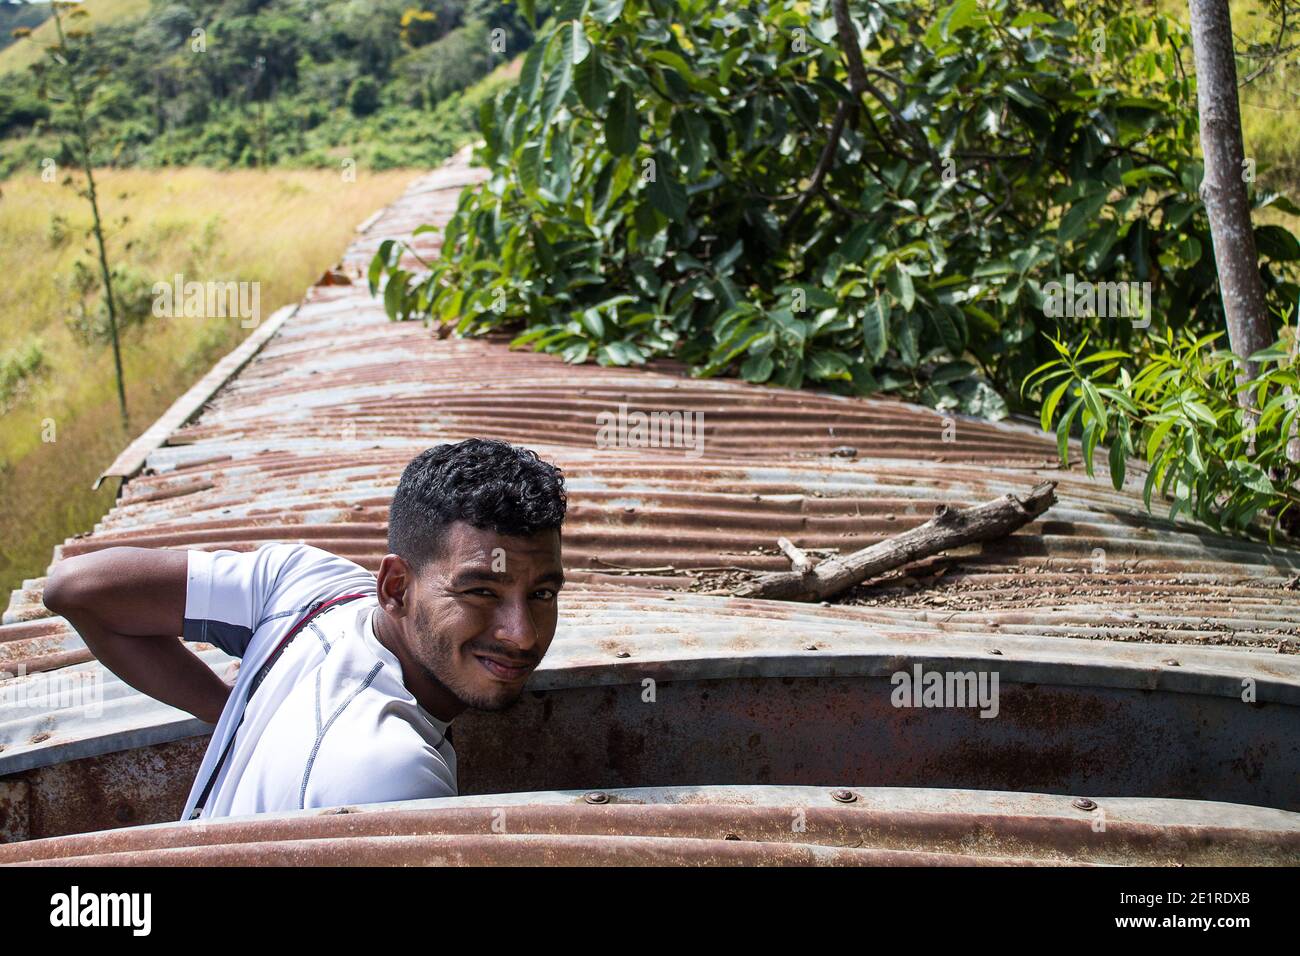 A man with a camera on his trip through the mountains of Miranda in Venezuela Stock Photo